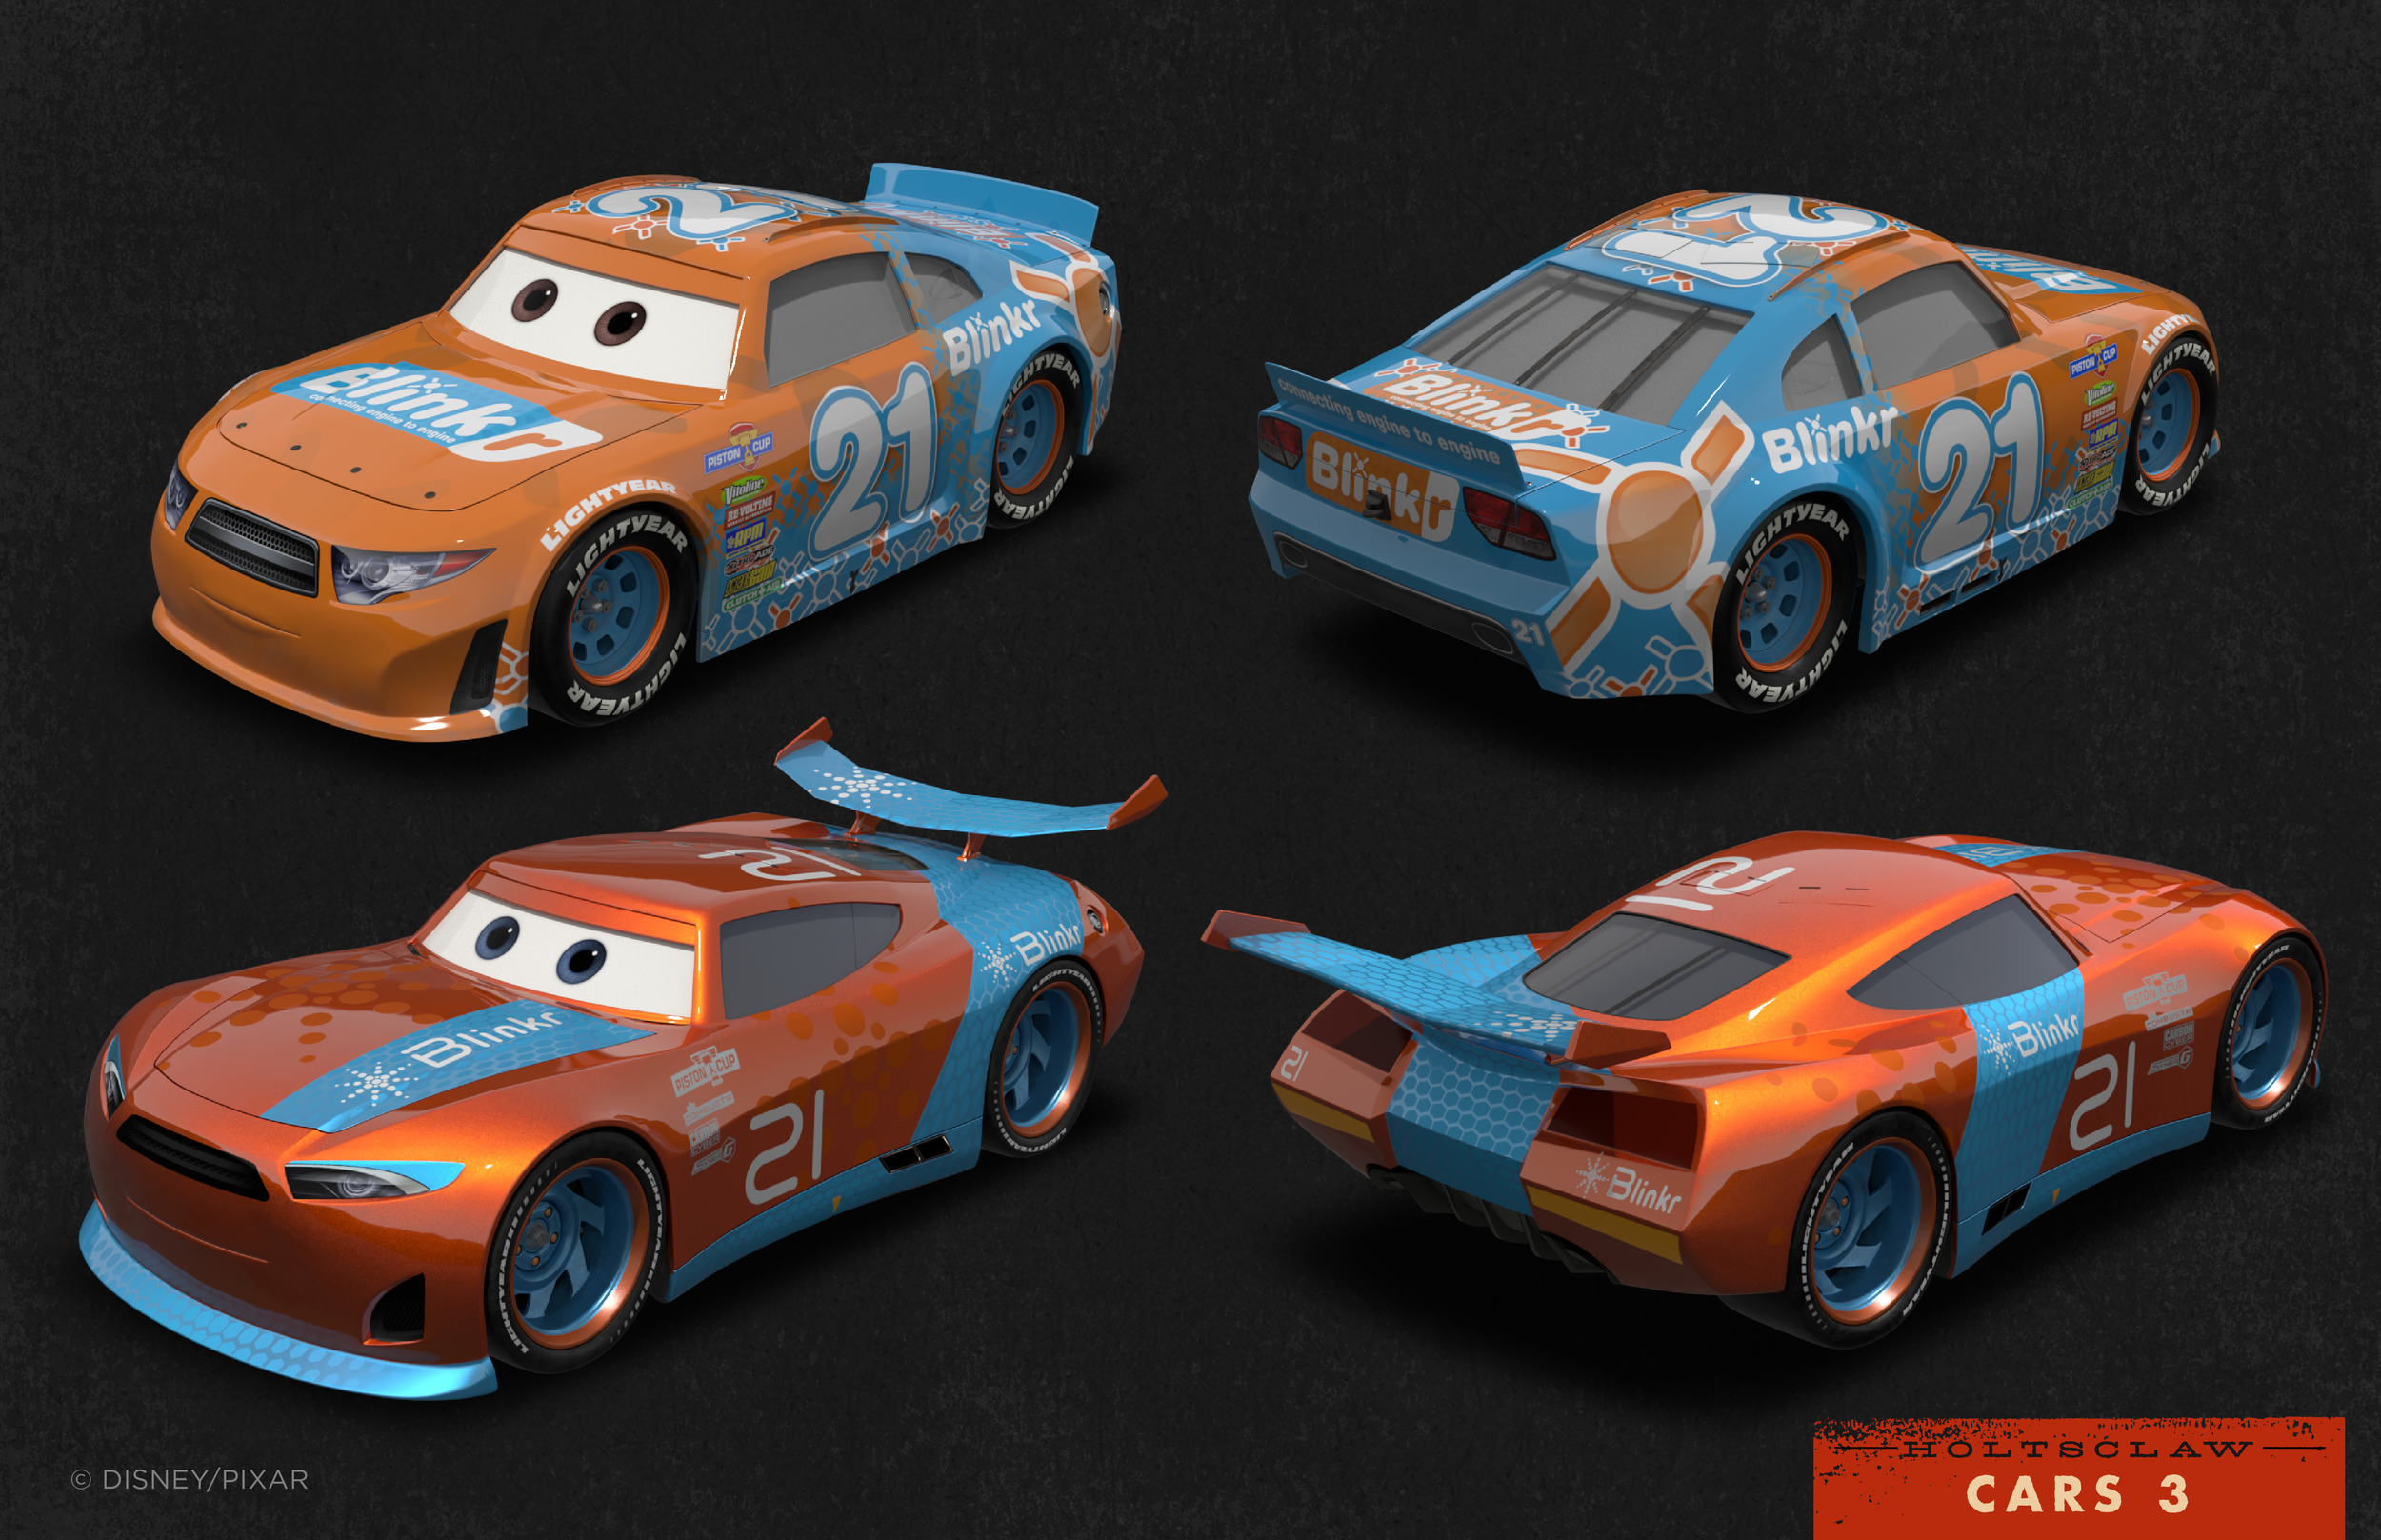 P cars 3. Тачки 3 гонщики. Тачки 3 Спиди комет. Pixar cars 3 гонщики.